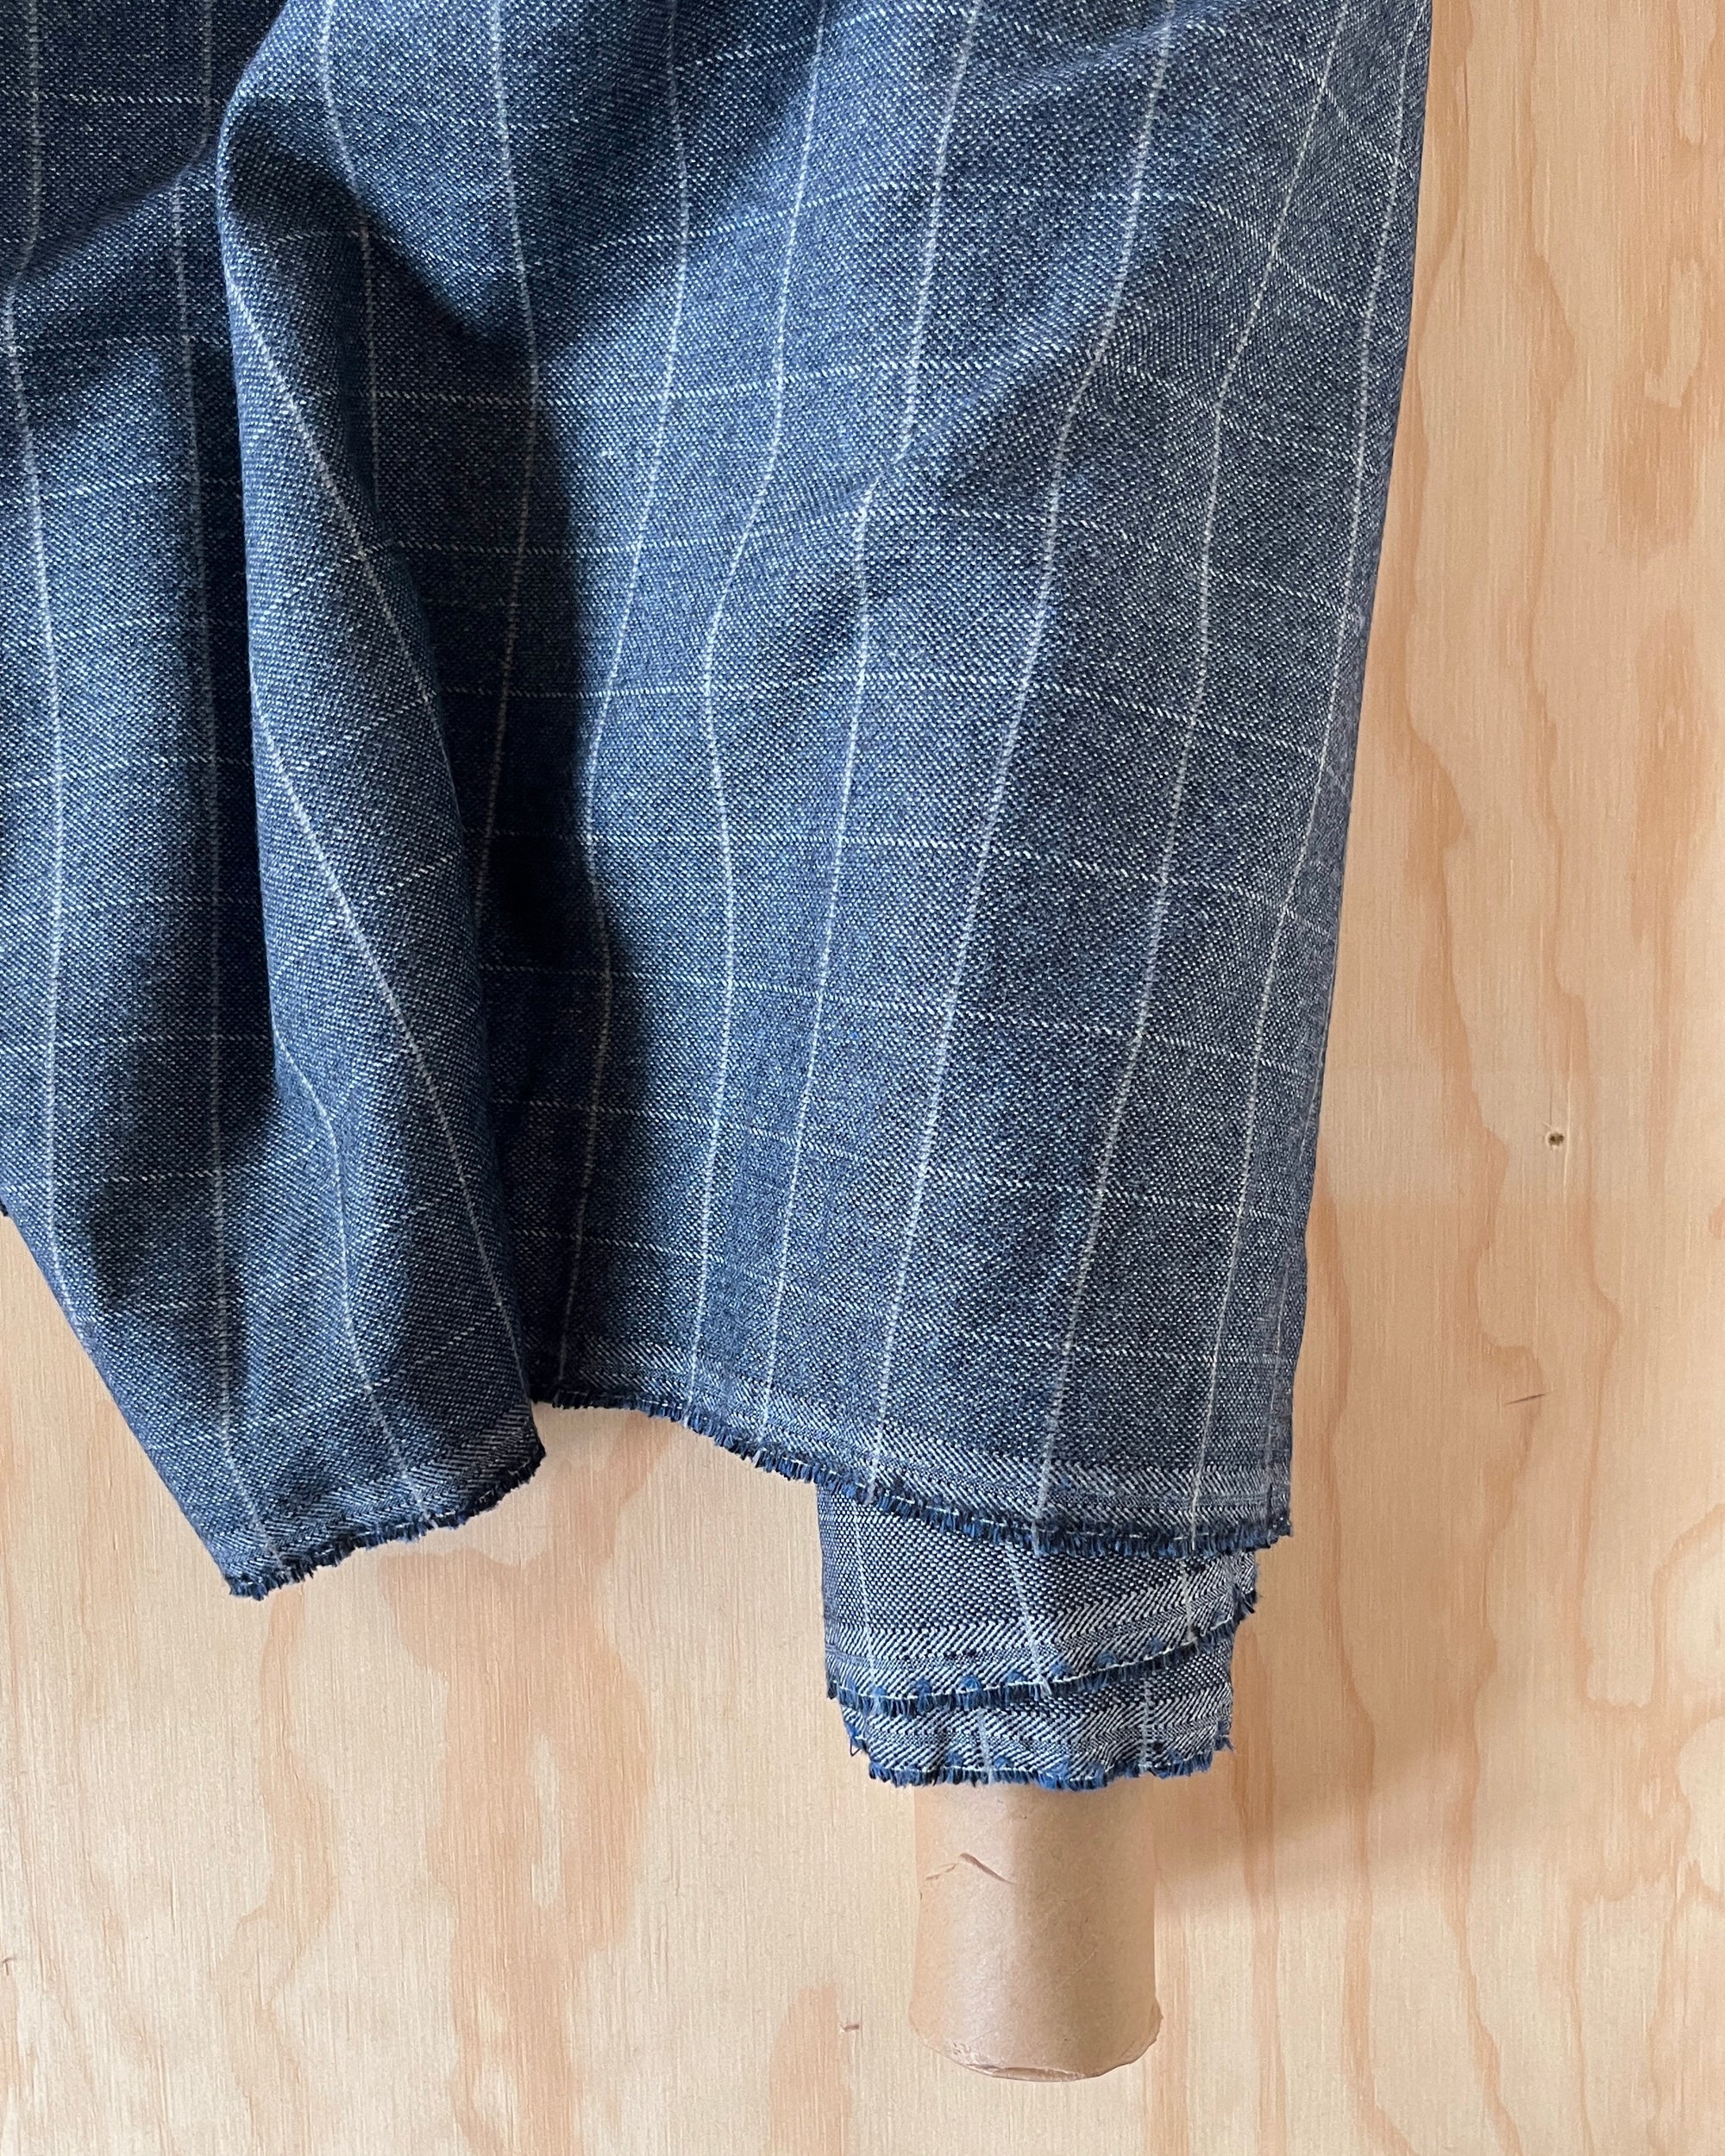 Cotton Flannel - Melange Windowpane Check 0,5m